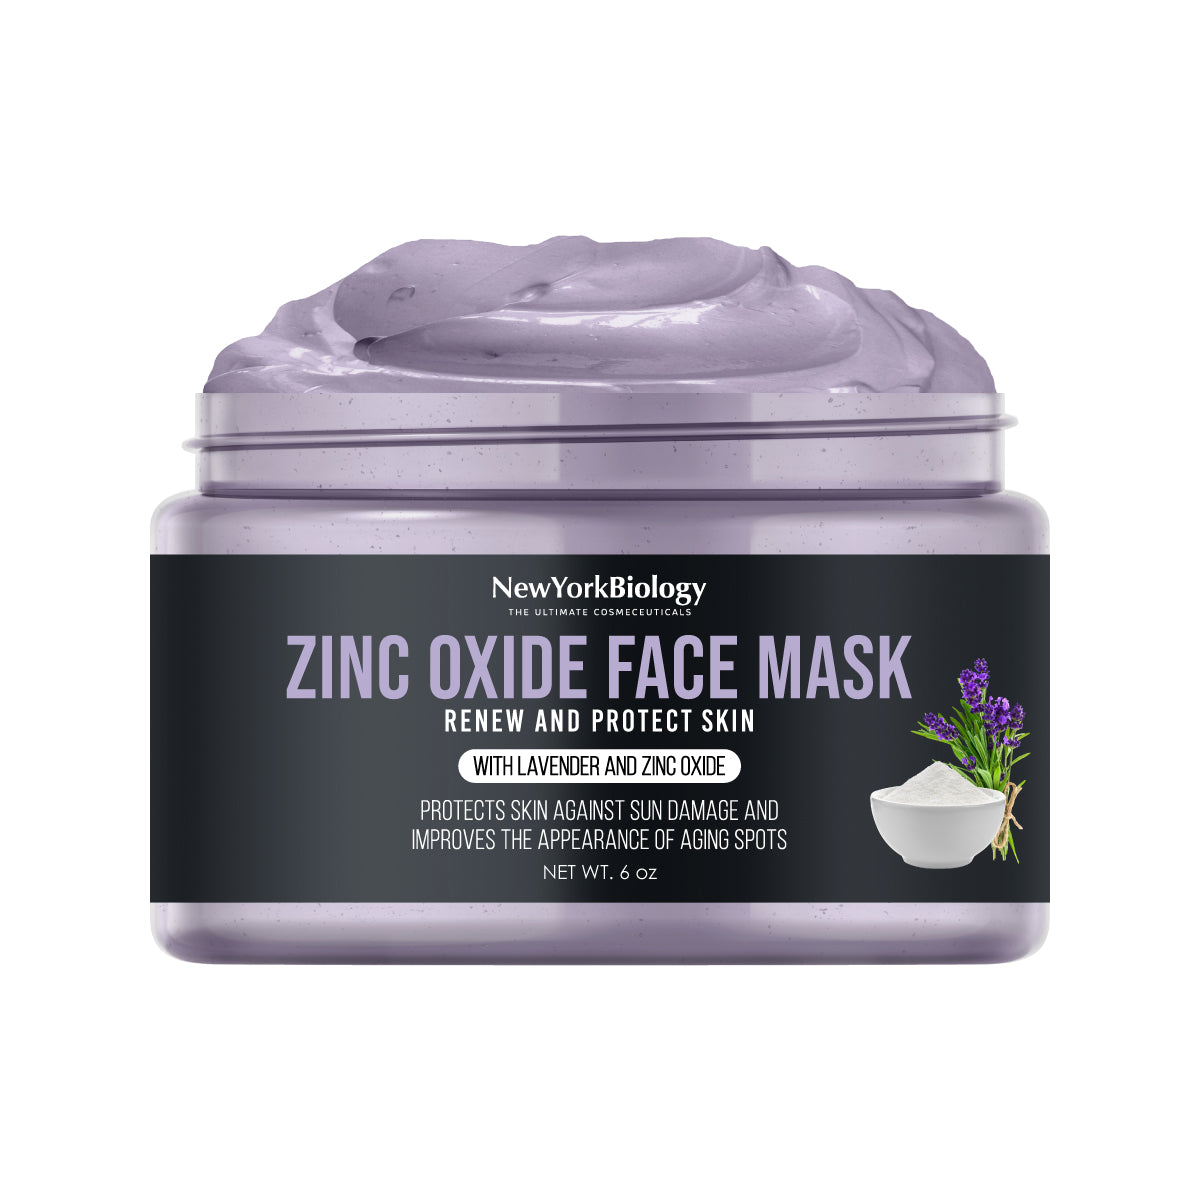 Zinc Oxide Facial Mask 6 oz – Moisturizing and Hydrating Face Mask